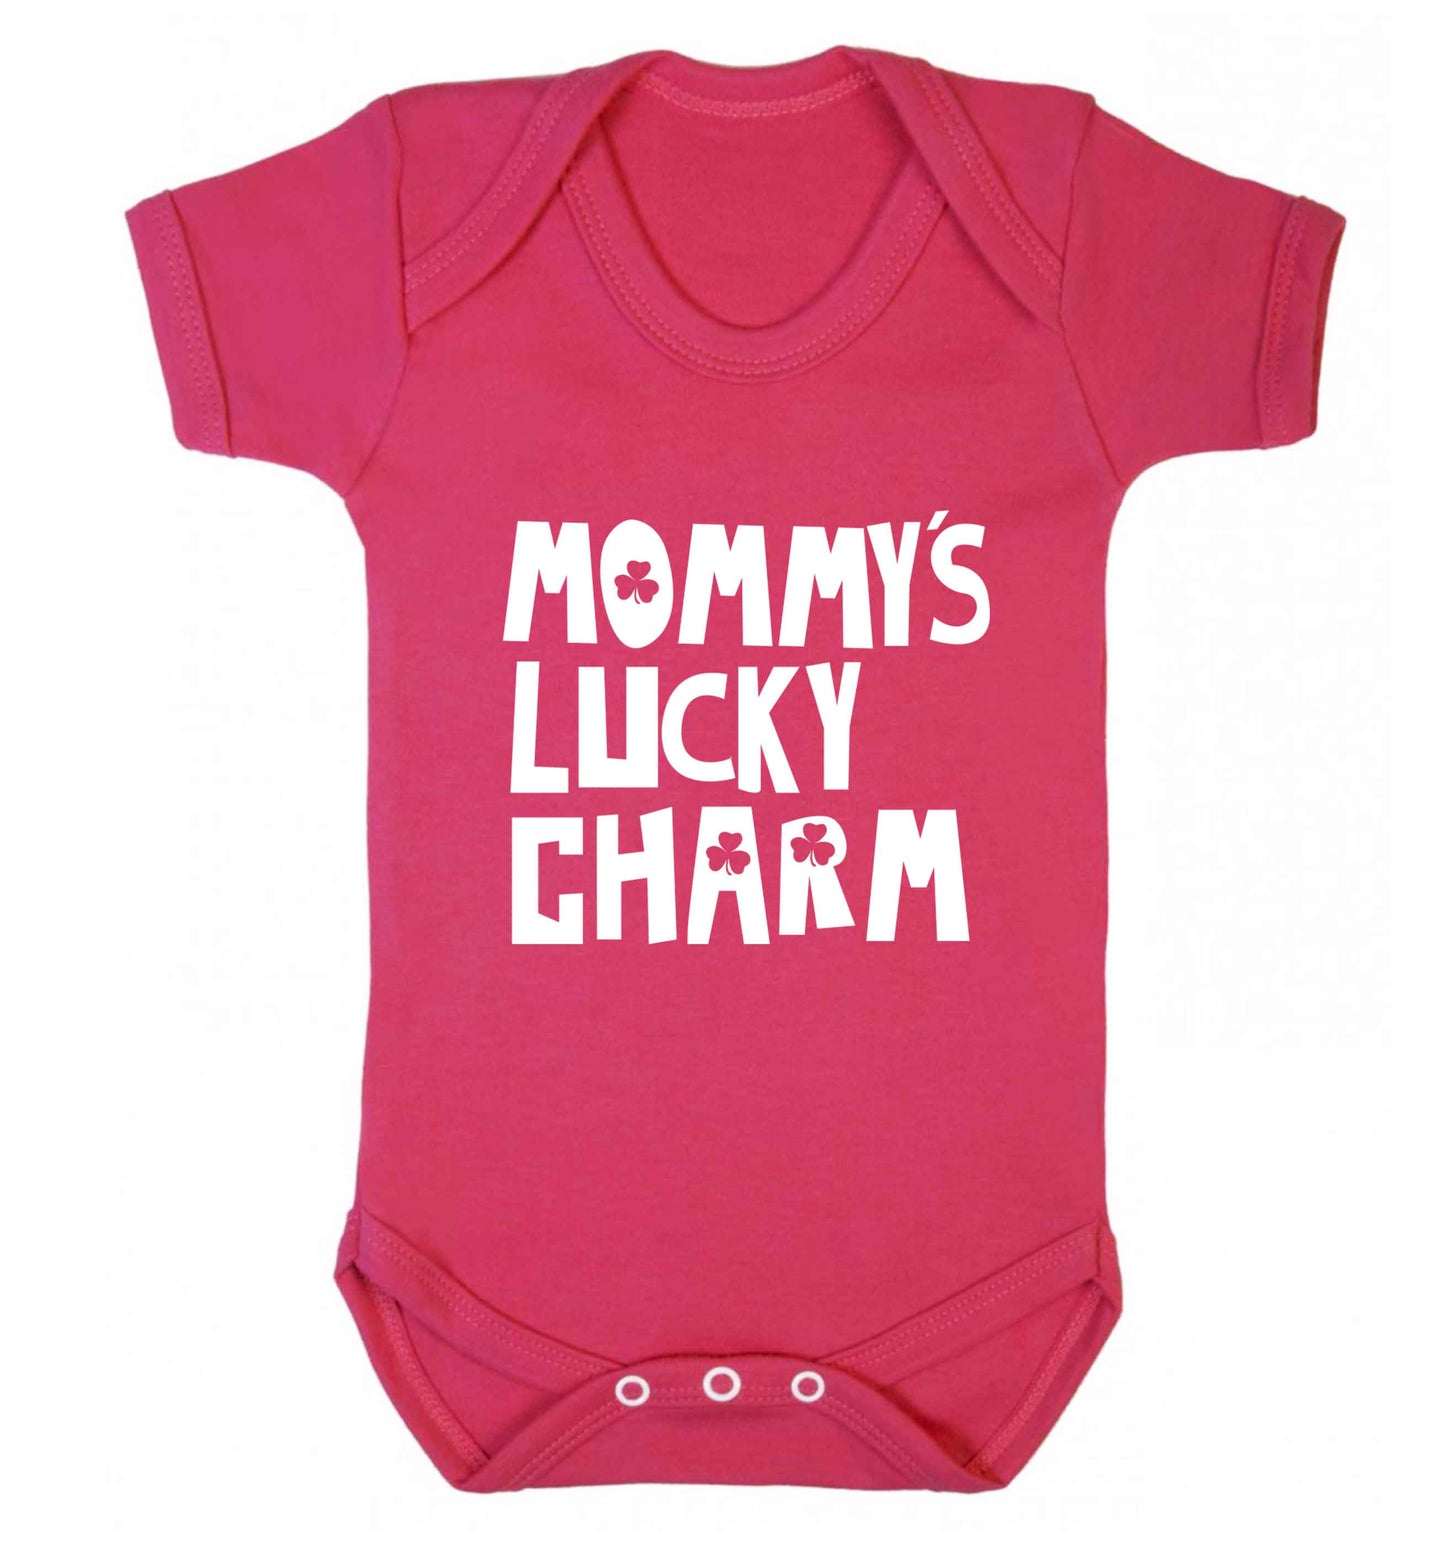 Mommy's lucky charm baby vest dark pink 18-24 months